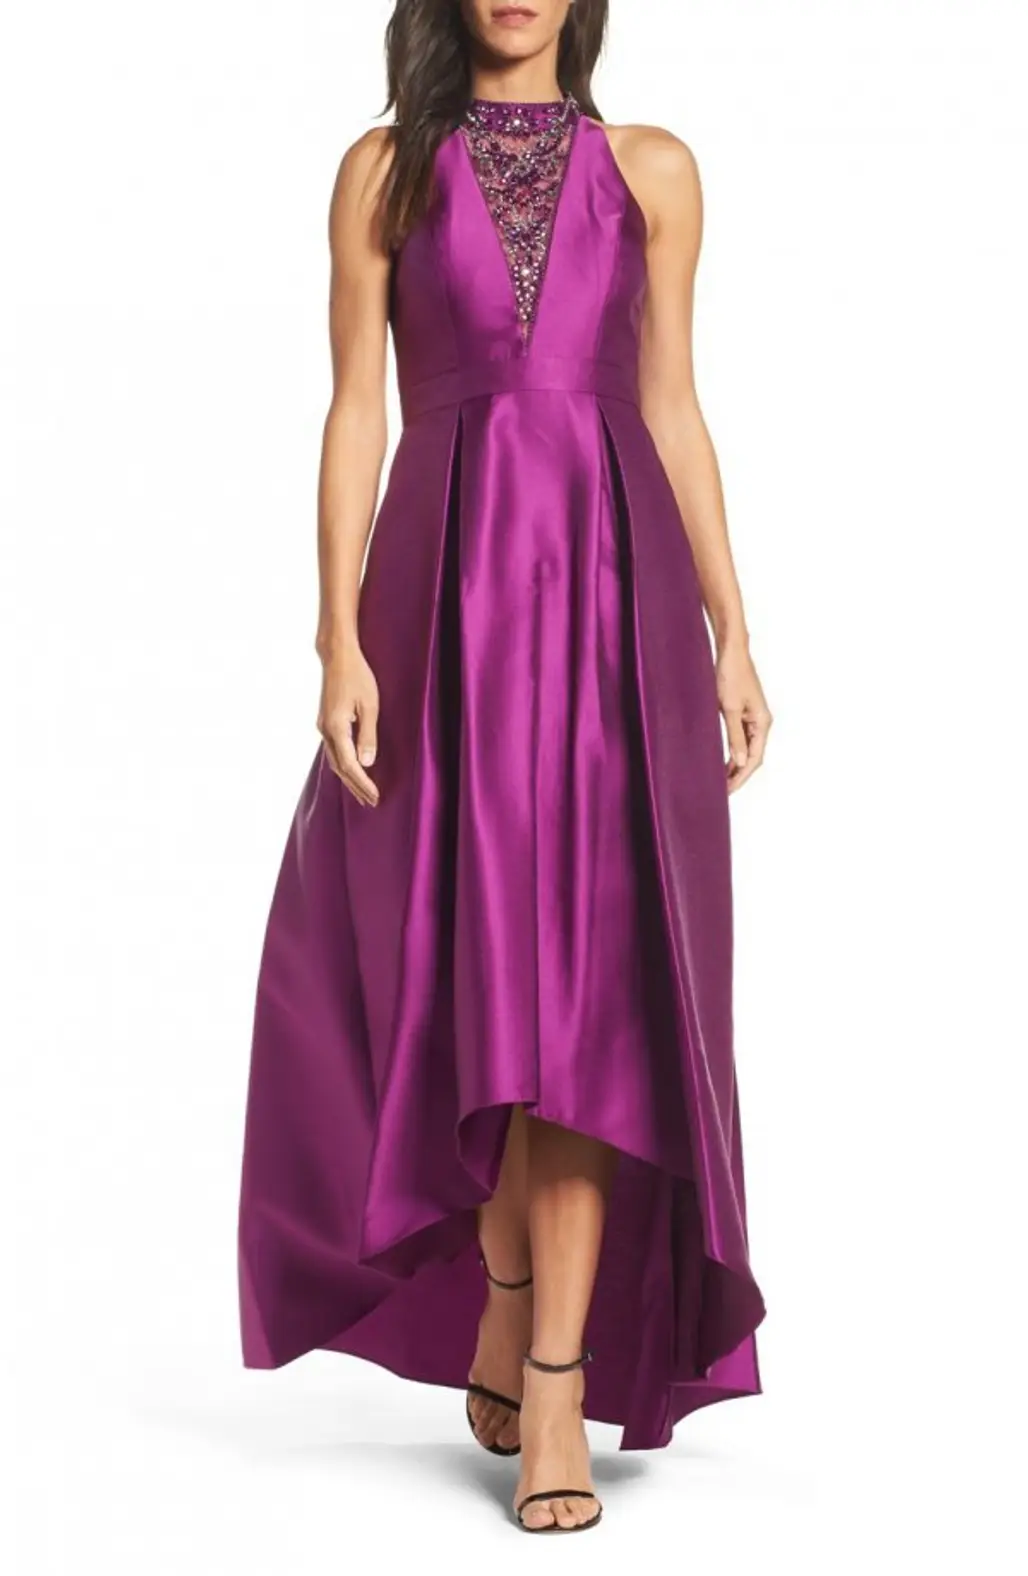 dress, day dress, purple, gown, magenta,